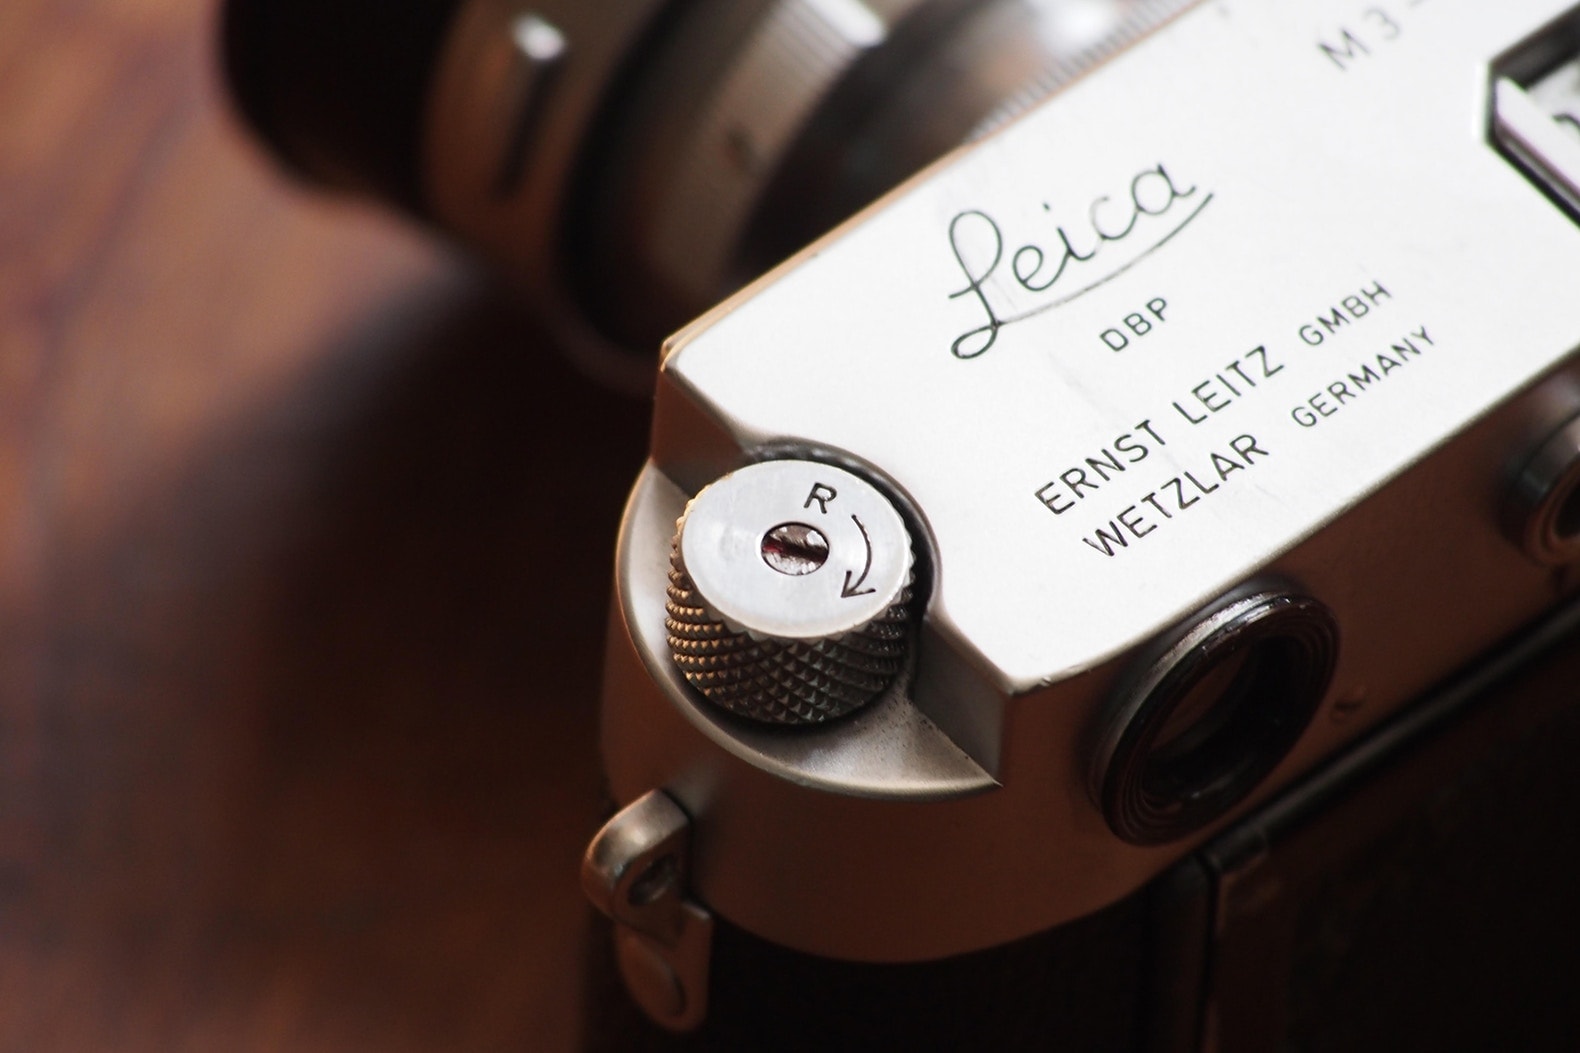 Zeiss 和 Huawei 有意收購 Leica 公司 45% 股權